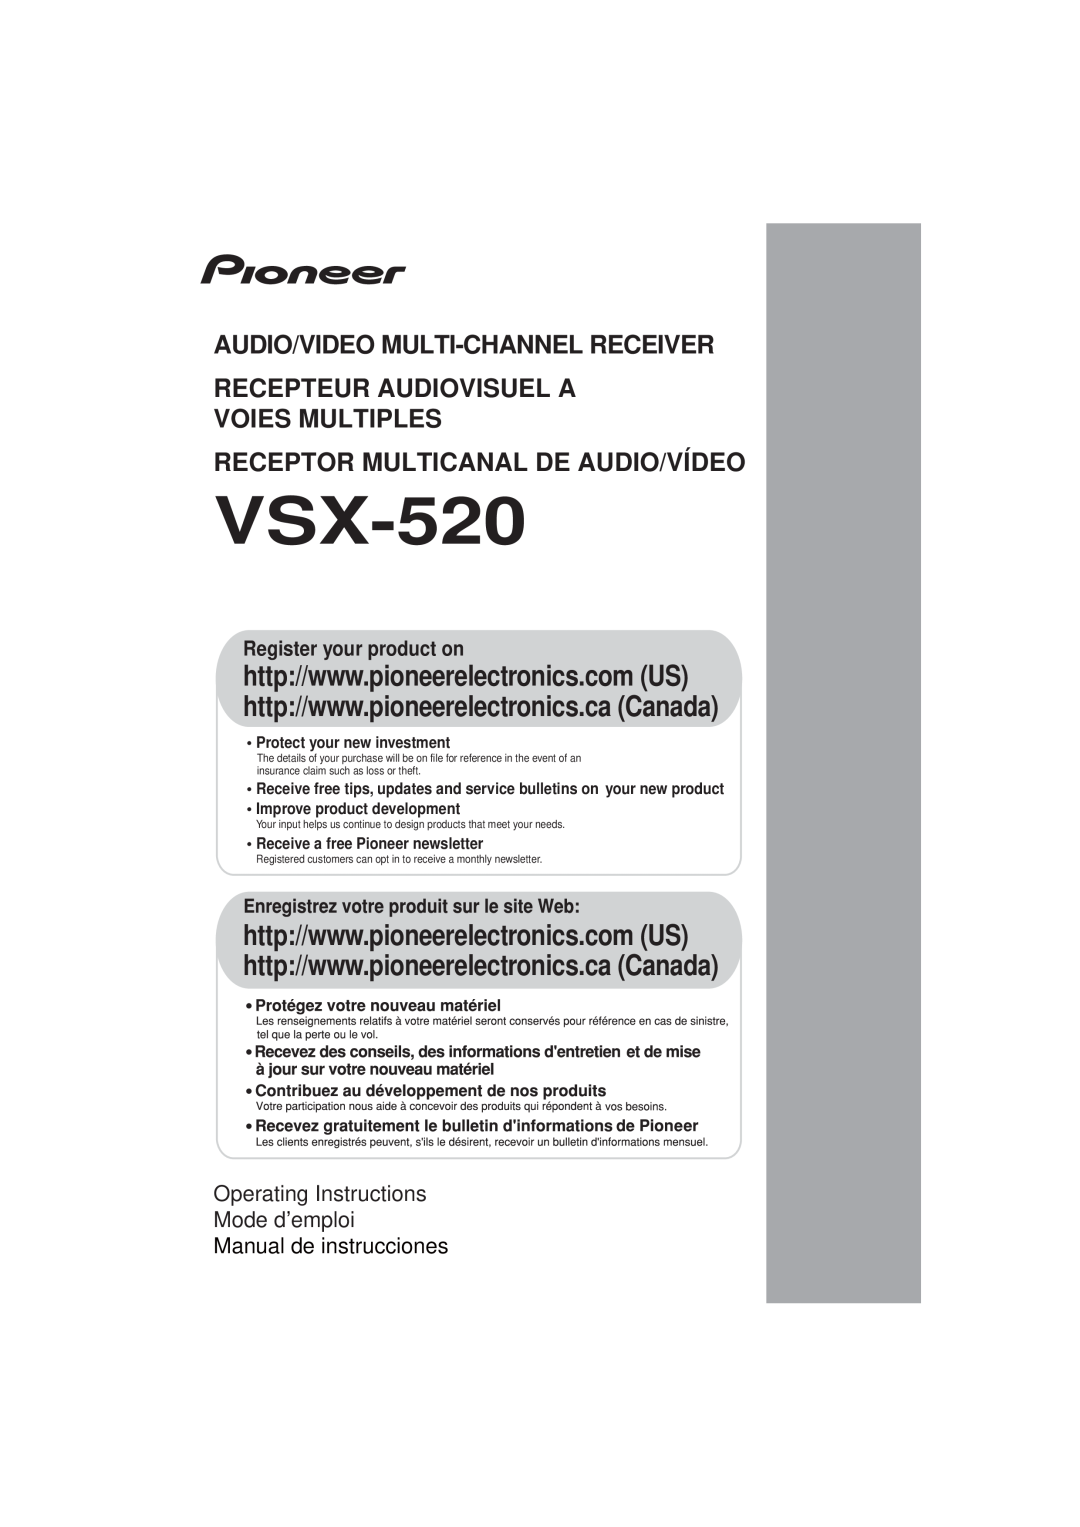 Pioneer VSX-520 manual Audio/Video Multi-Channelreceiver, Recepteur Audiovisuel A Voies Multiples 